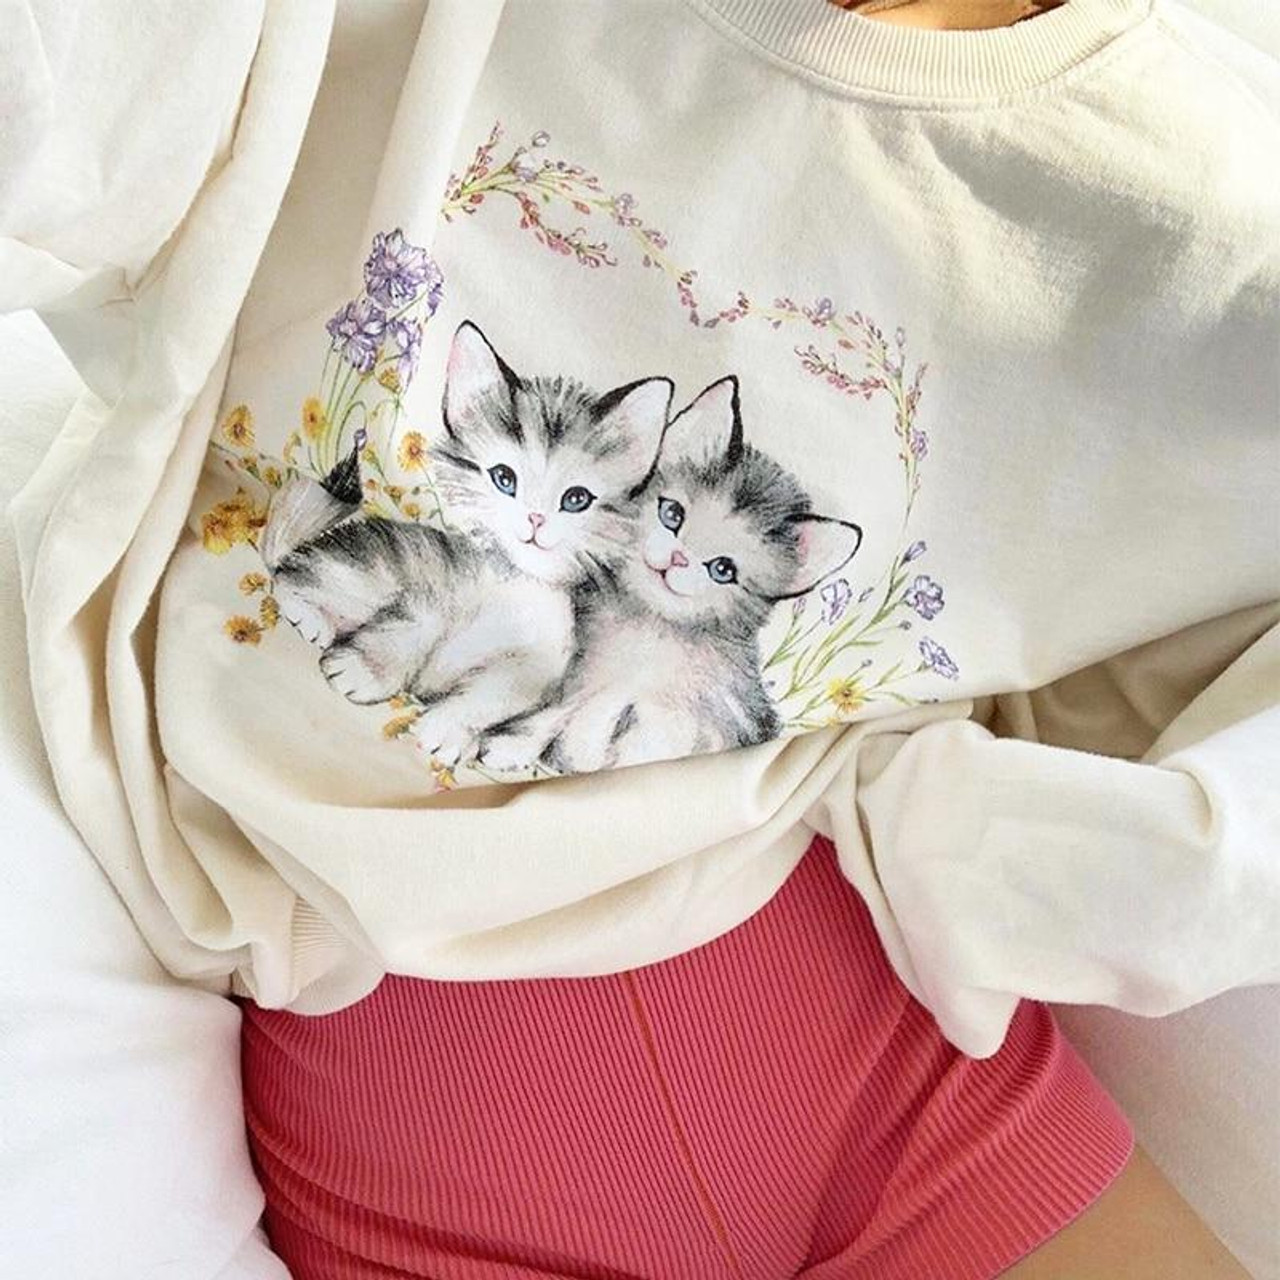 Sweatshirt Cute Print, Cat Print Sweatshirt